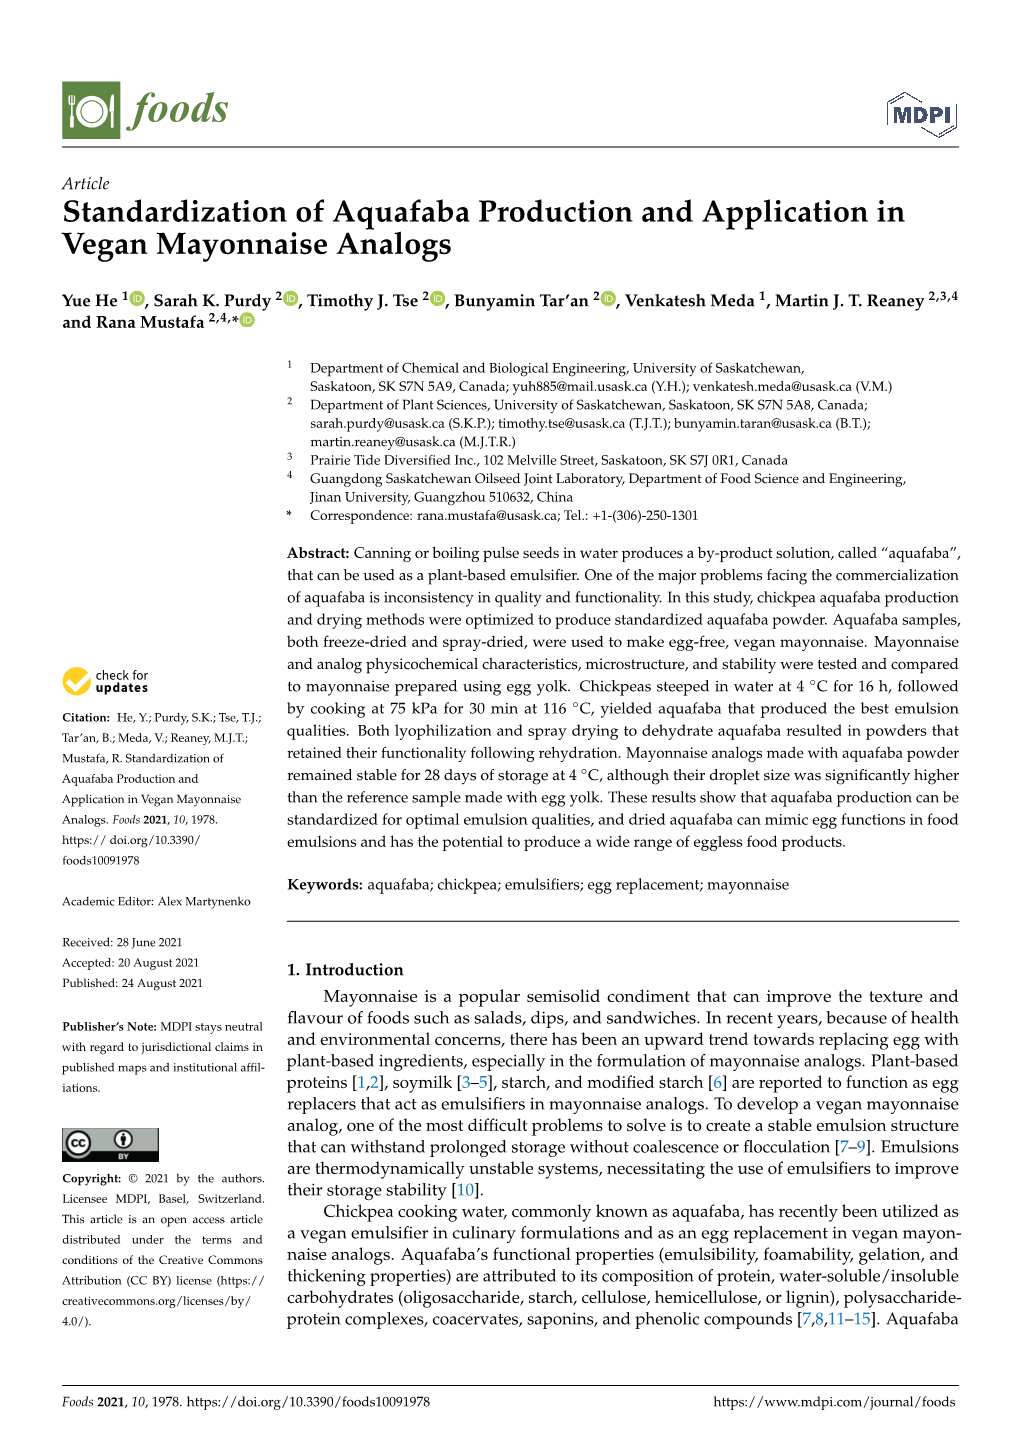 Standardization of Aquafaba Production and Application in Vegan Mayonnaise Analogs